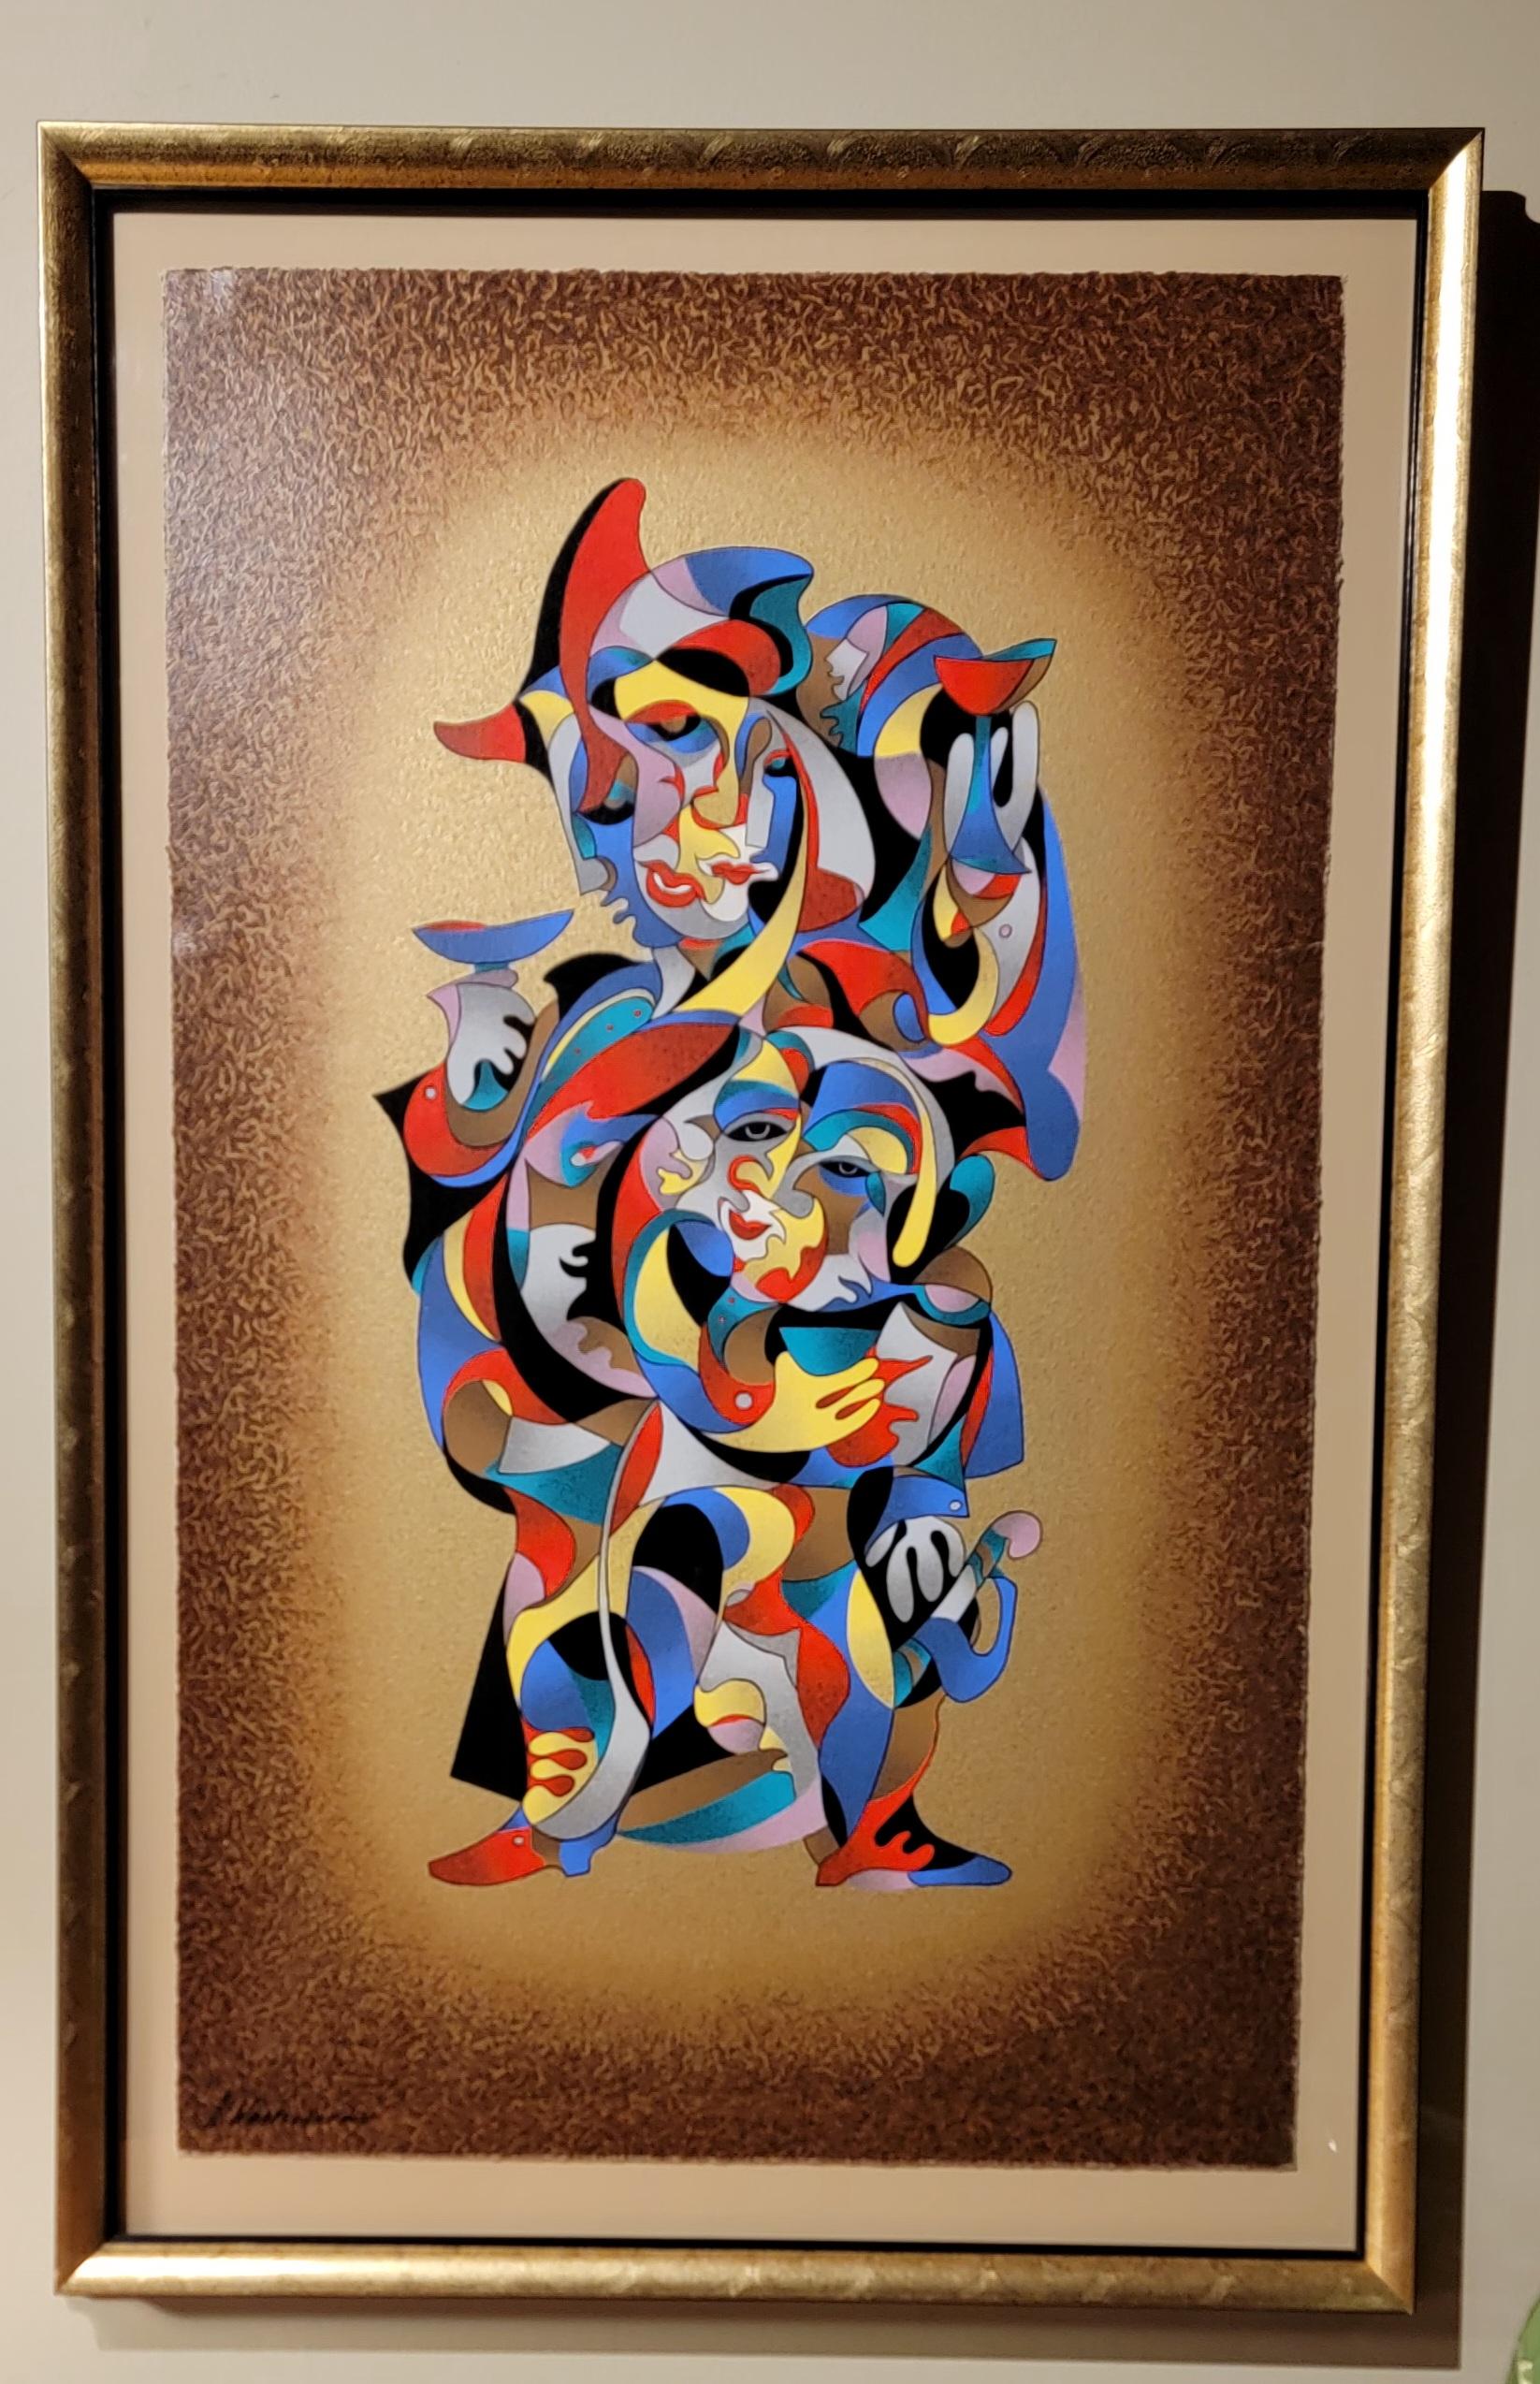 Anatole Krasnyanski Abstract Serigraph No. 11/60 2